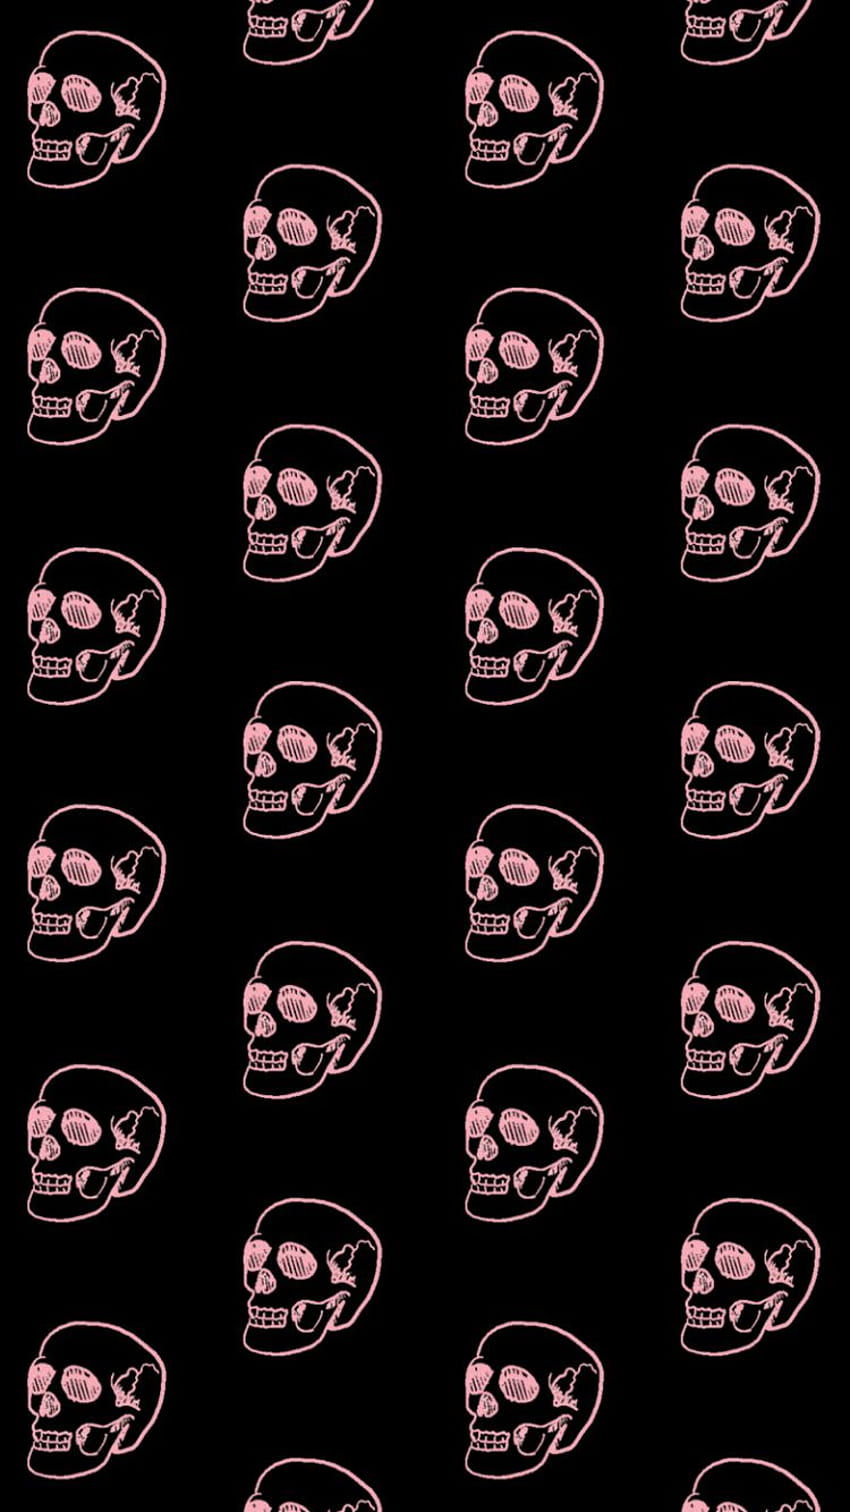 Wallpaper background phone pink black skull pattern cute aesthetic background phone wallpaper pink black skull pattern cute aesthetic - Gothic, horror